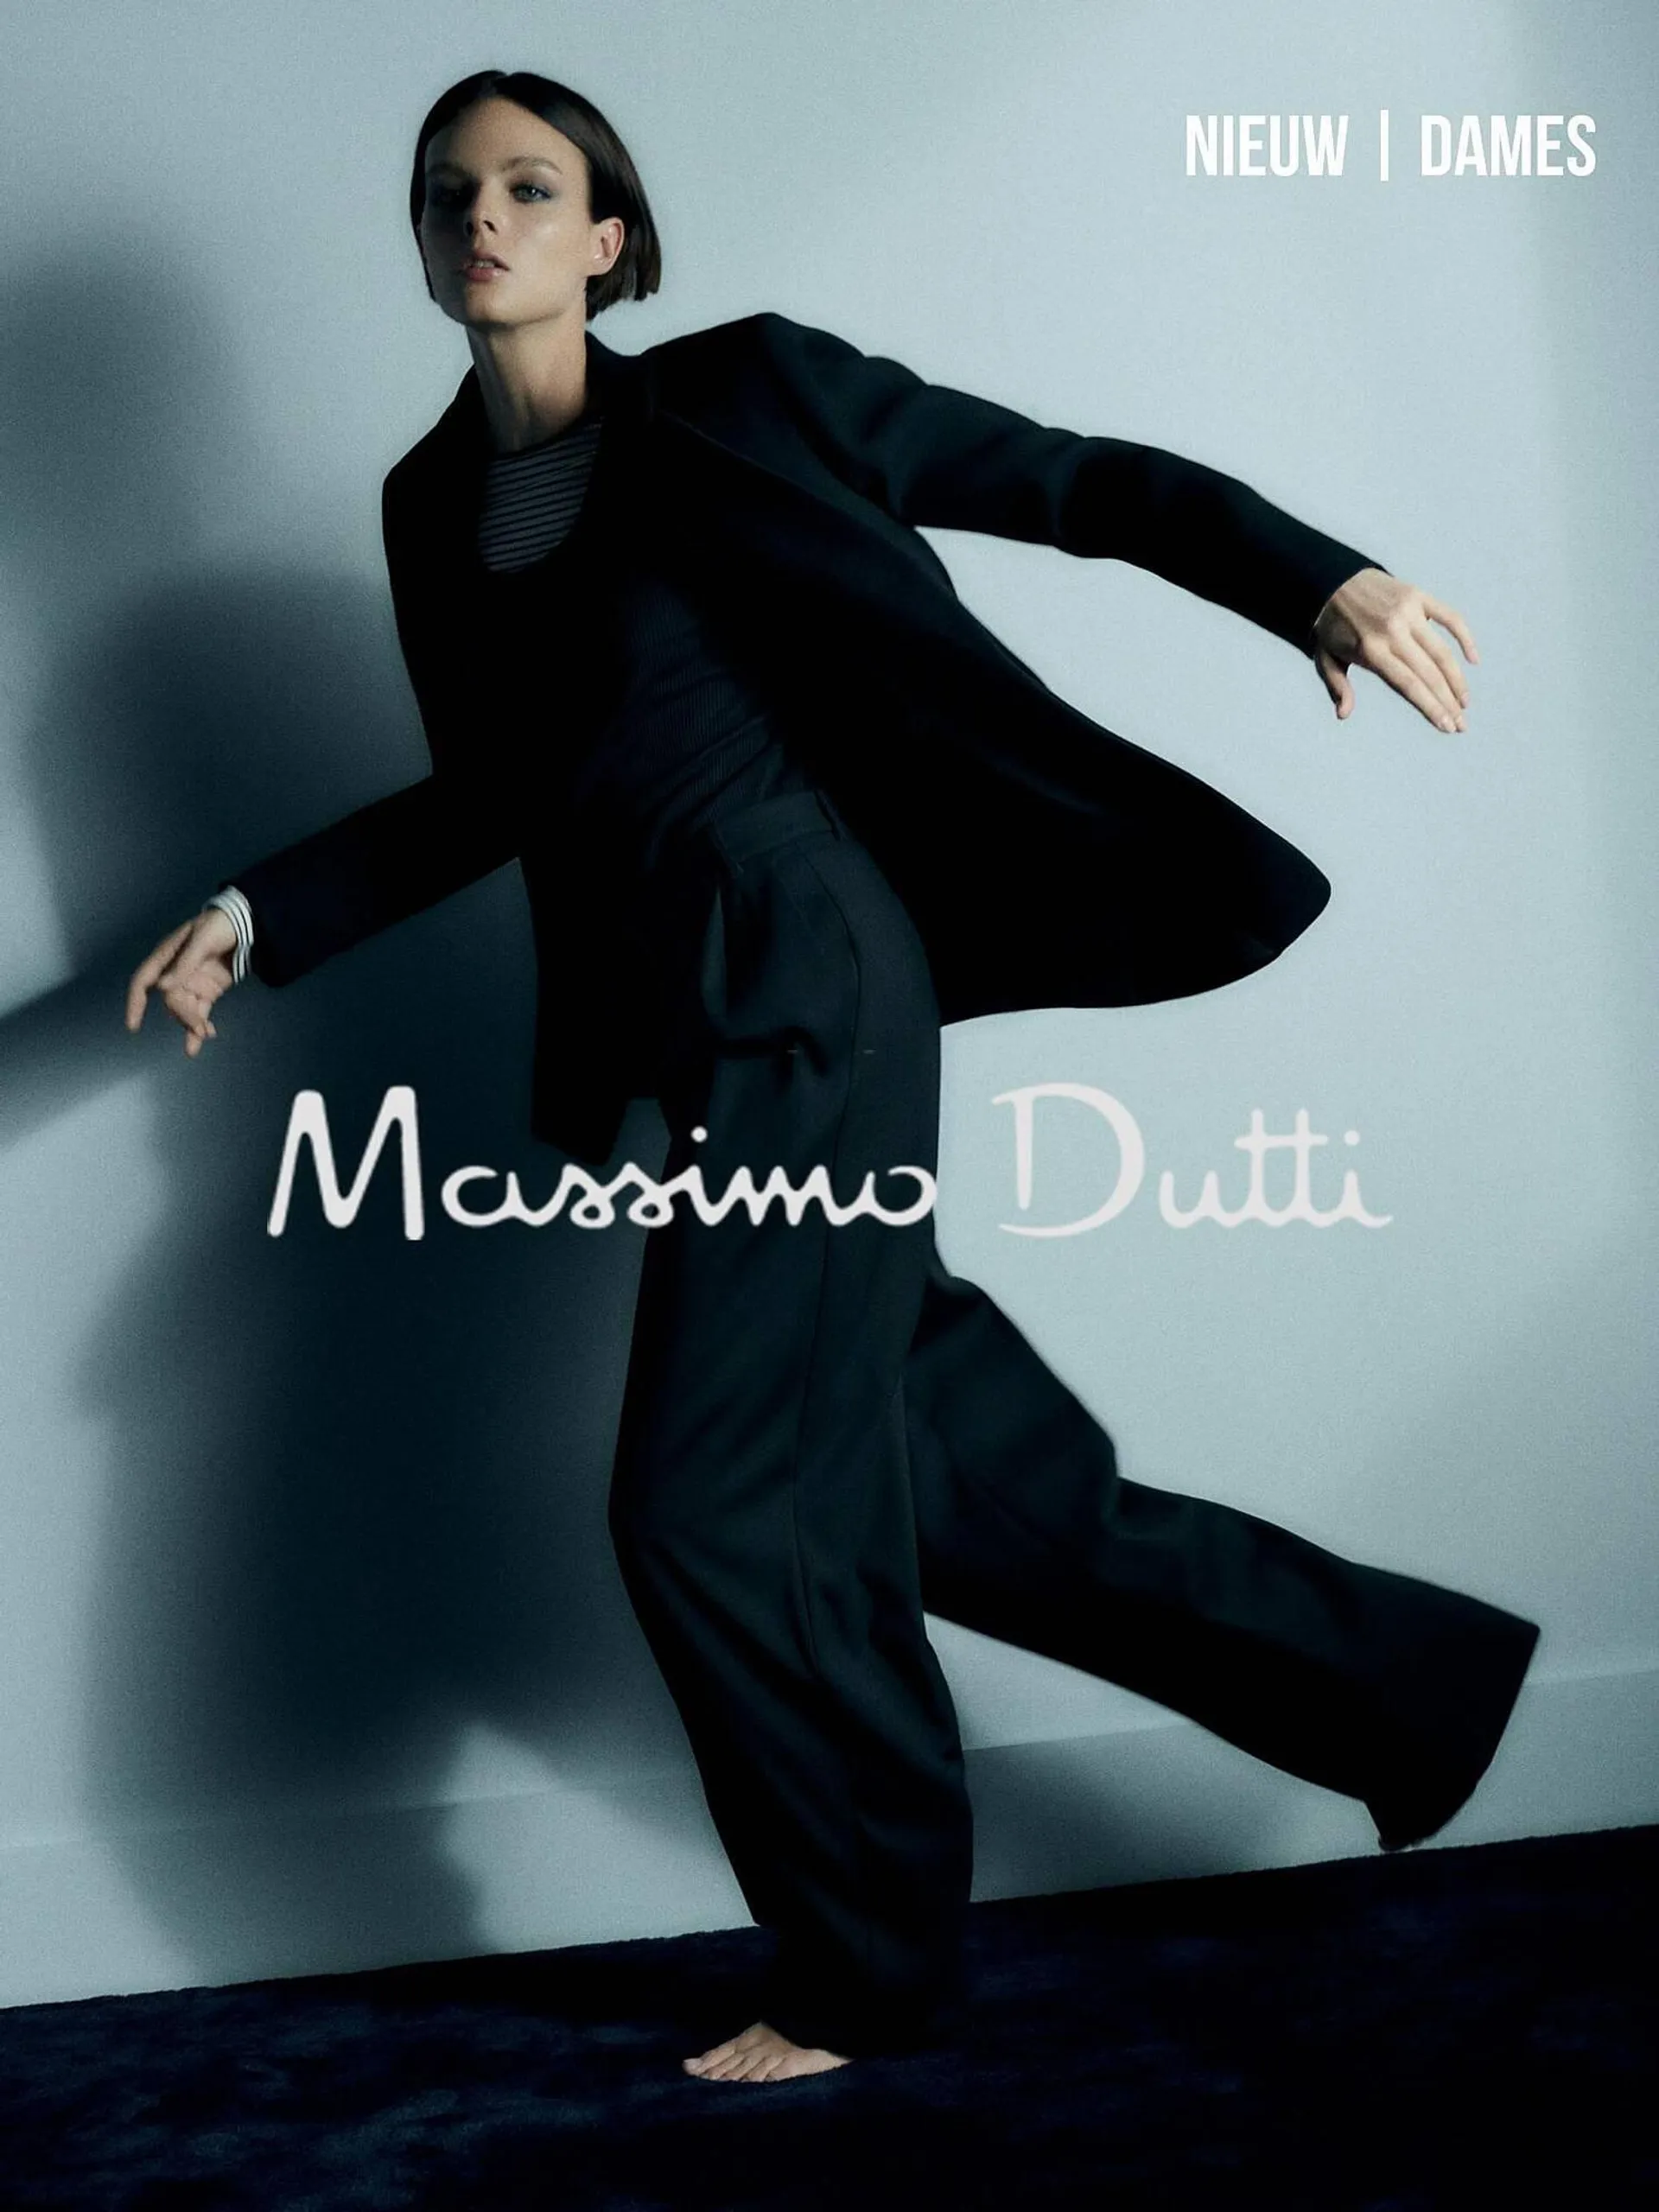 Massimo Dutti Folder - 1